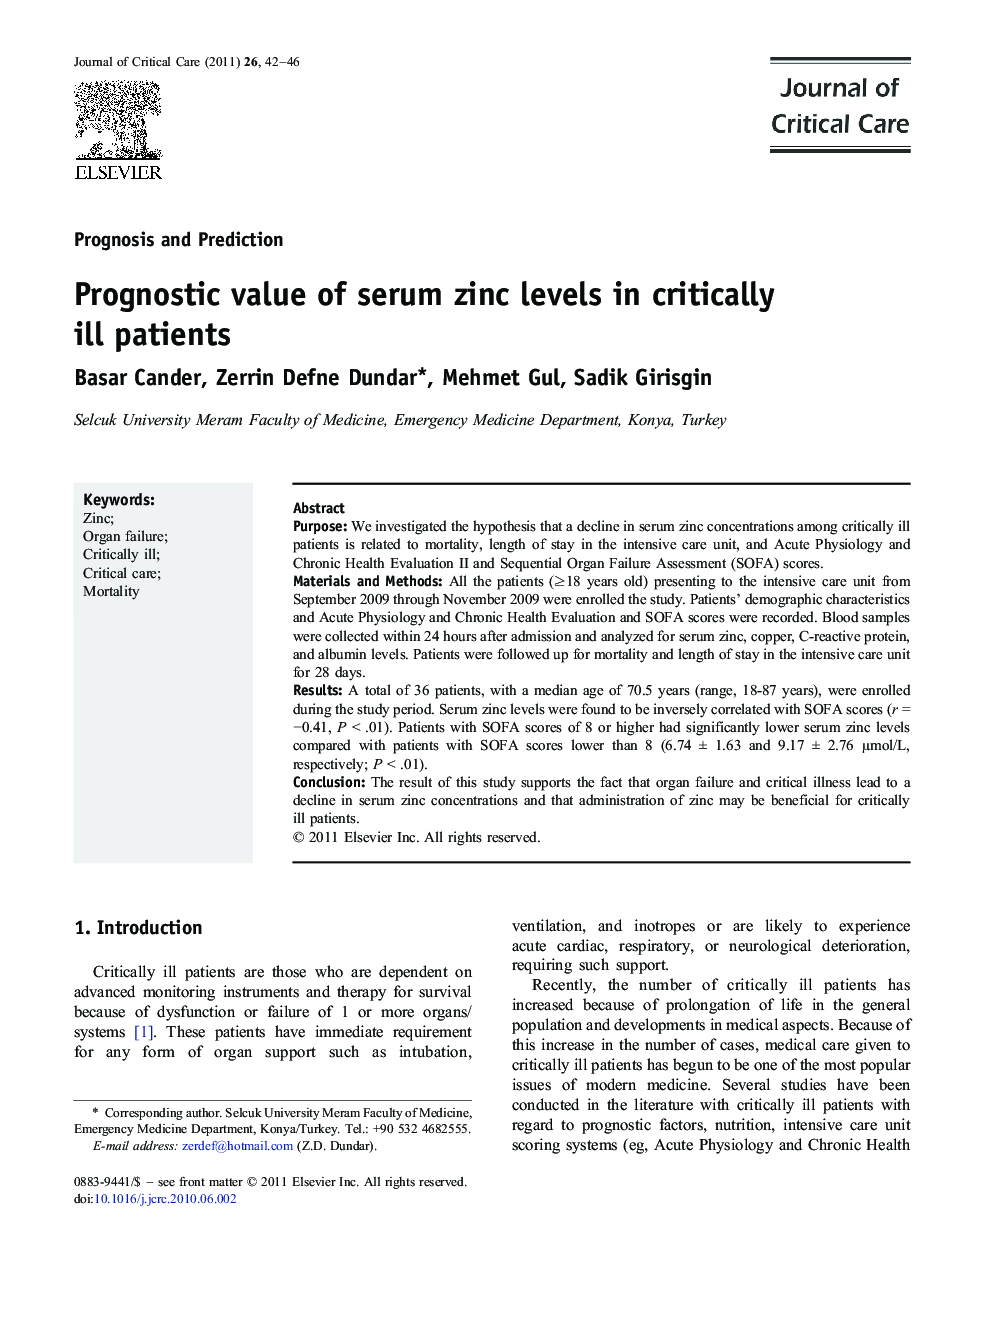 Prognostic value of serum zinc levels in critically ill patients